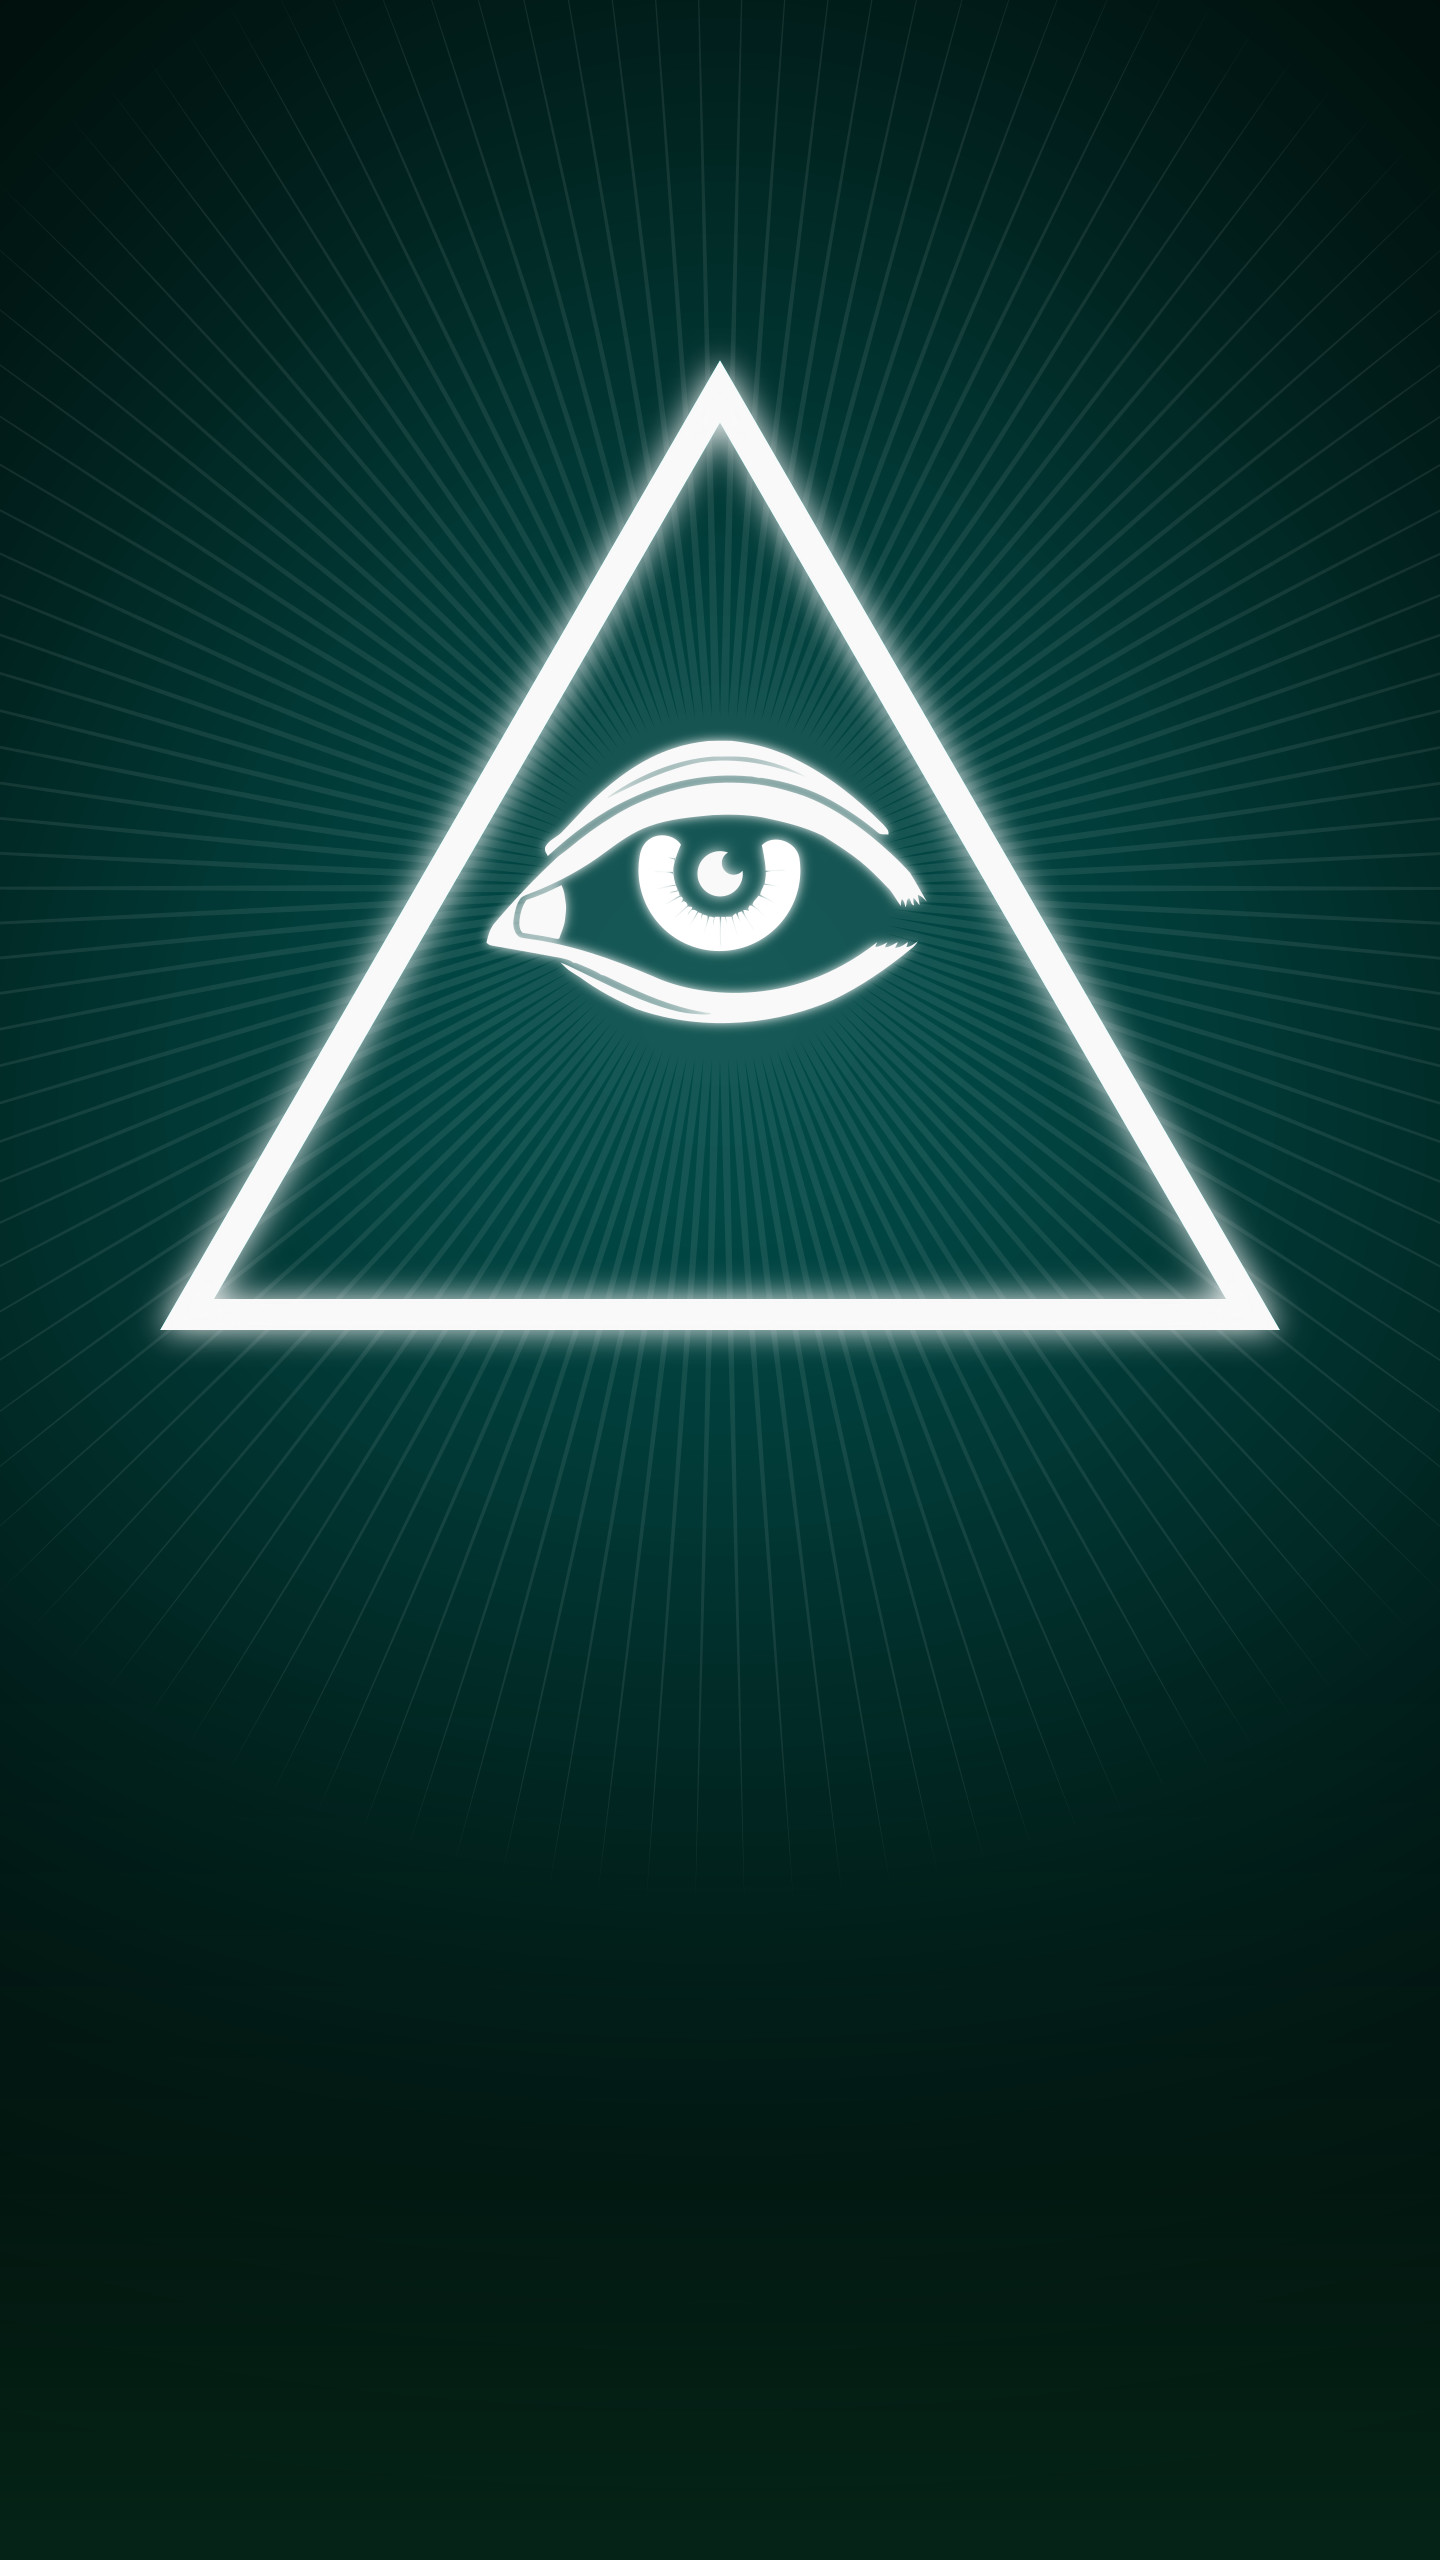 Illuminati Wallpaper 1080p Image